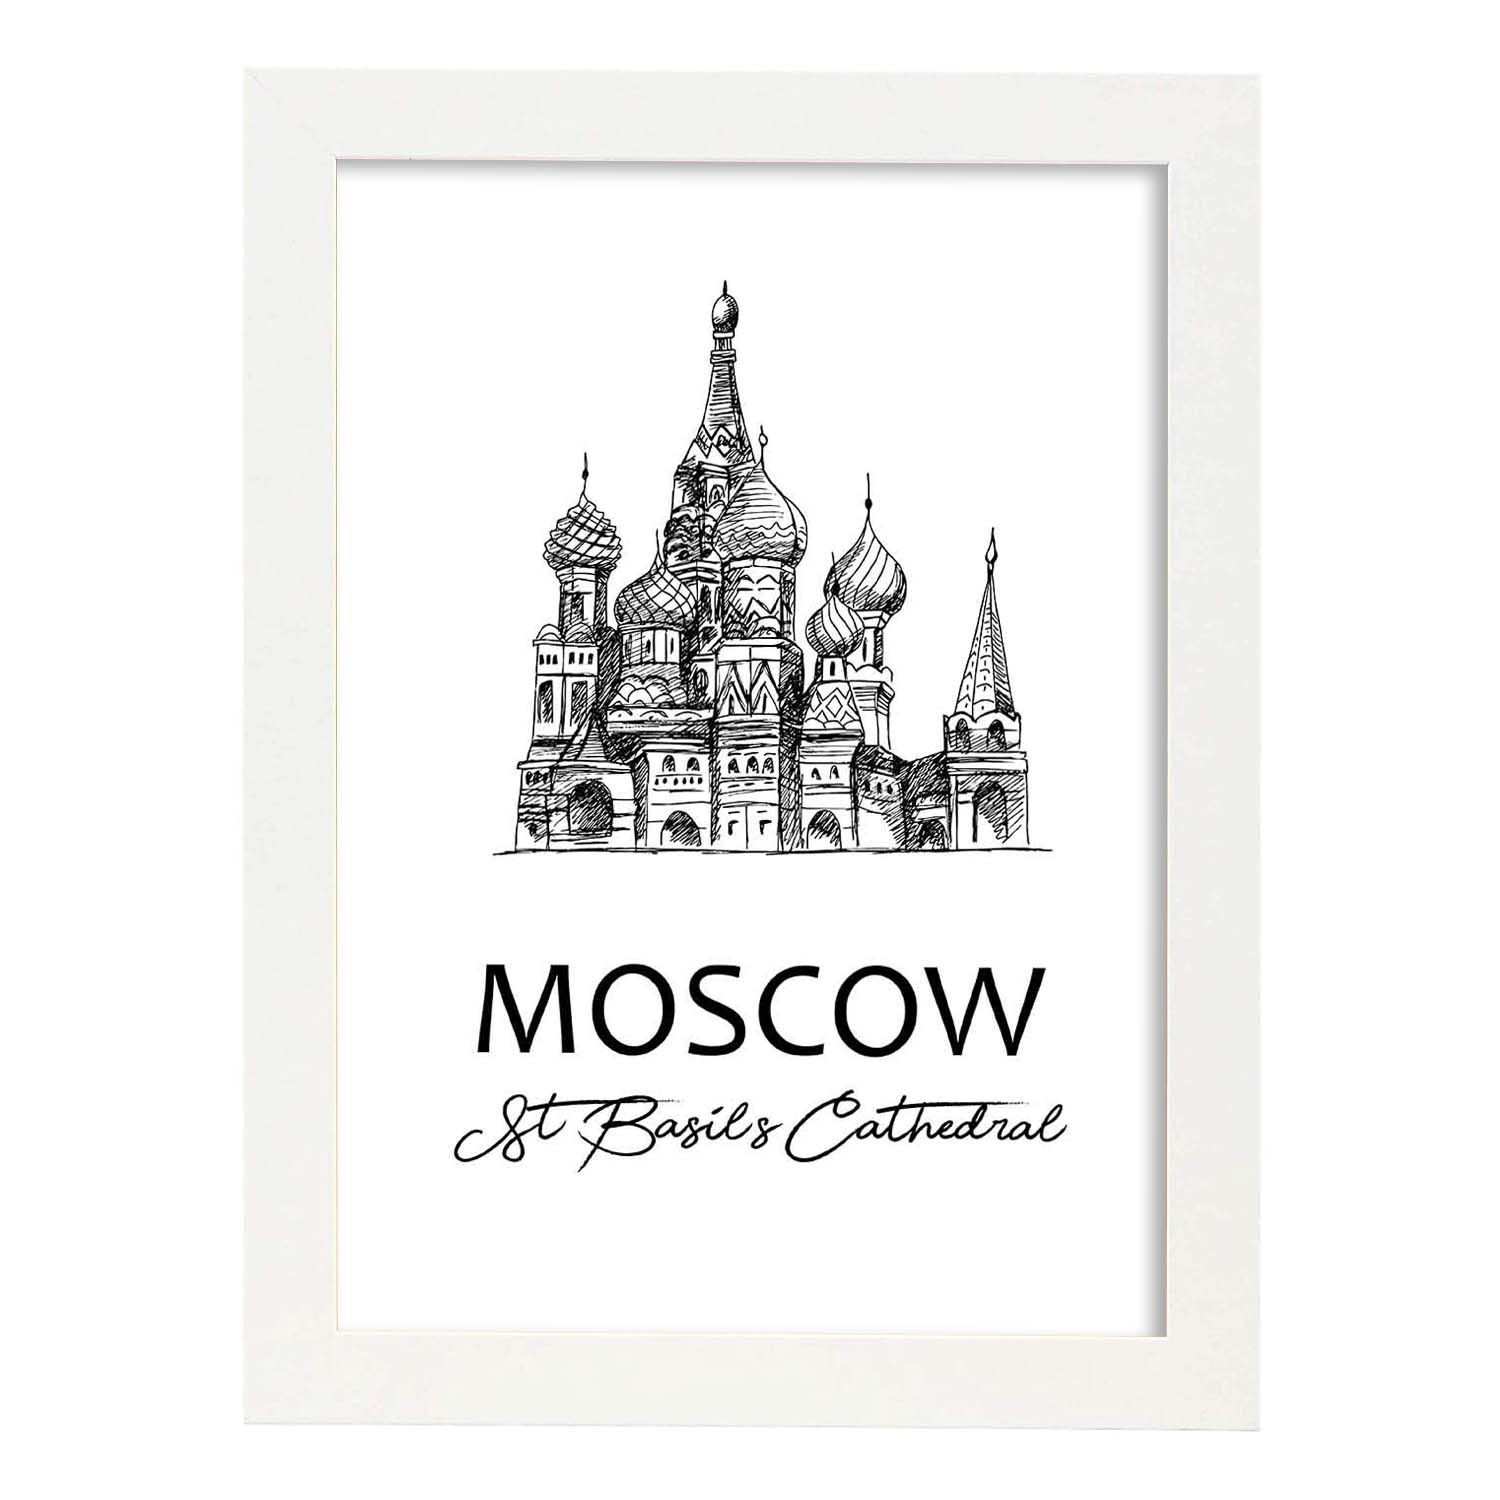 Poster de Moscú - Catedral de San Basilio. Láminas con monumentos de ciudades.-Artwork-Nacnic-A3-Marco Blanco-Nacnic Estudio SL